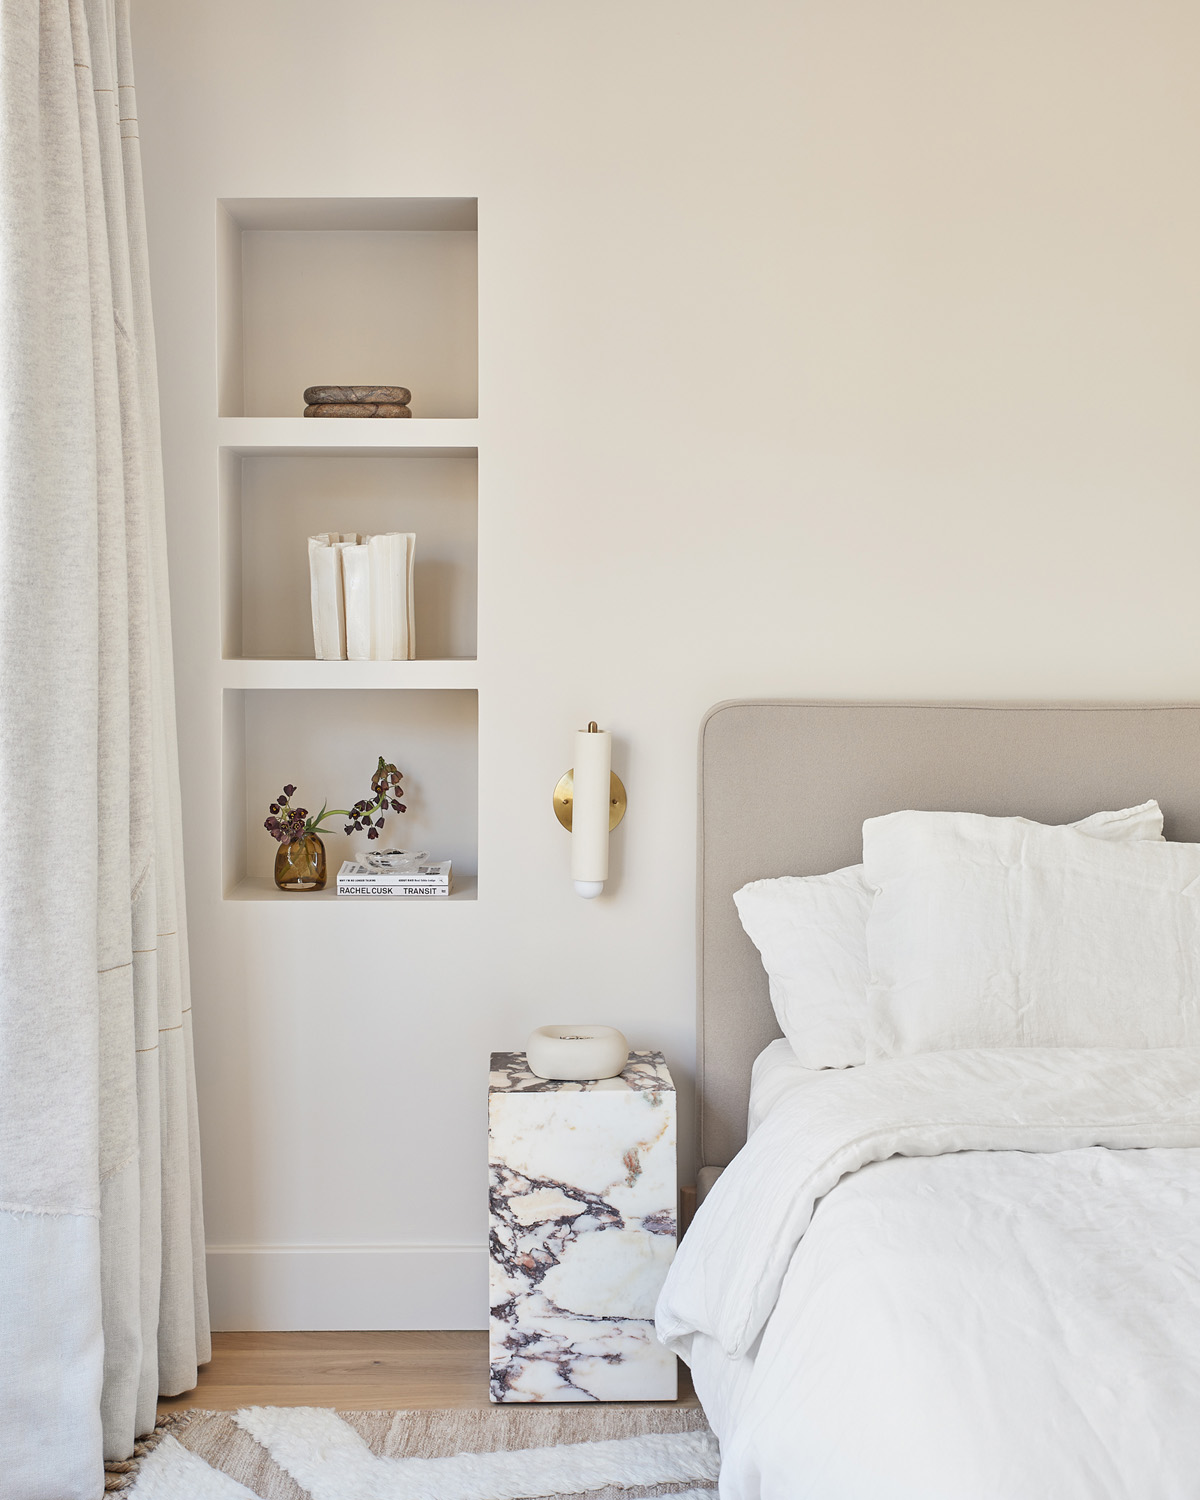 Bedroom by nune - minimalist interior design studio in London